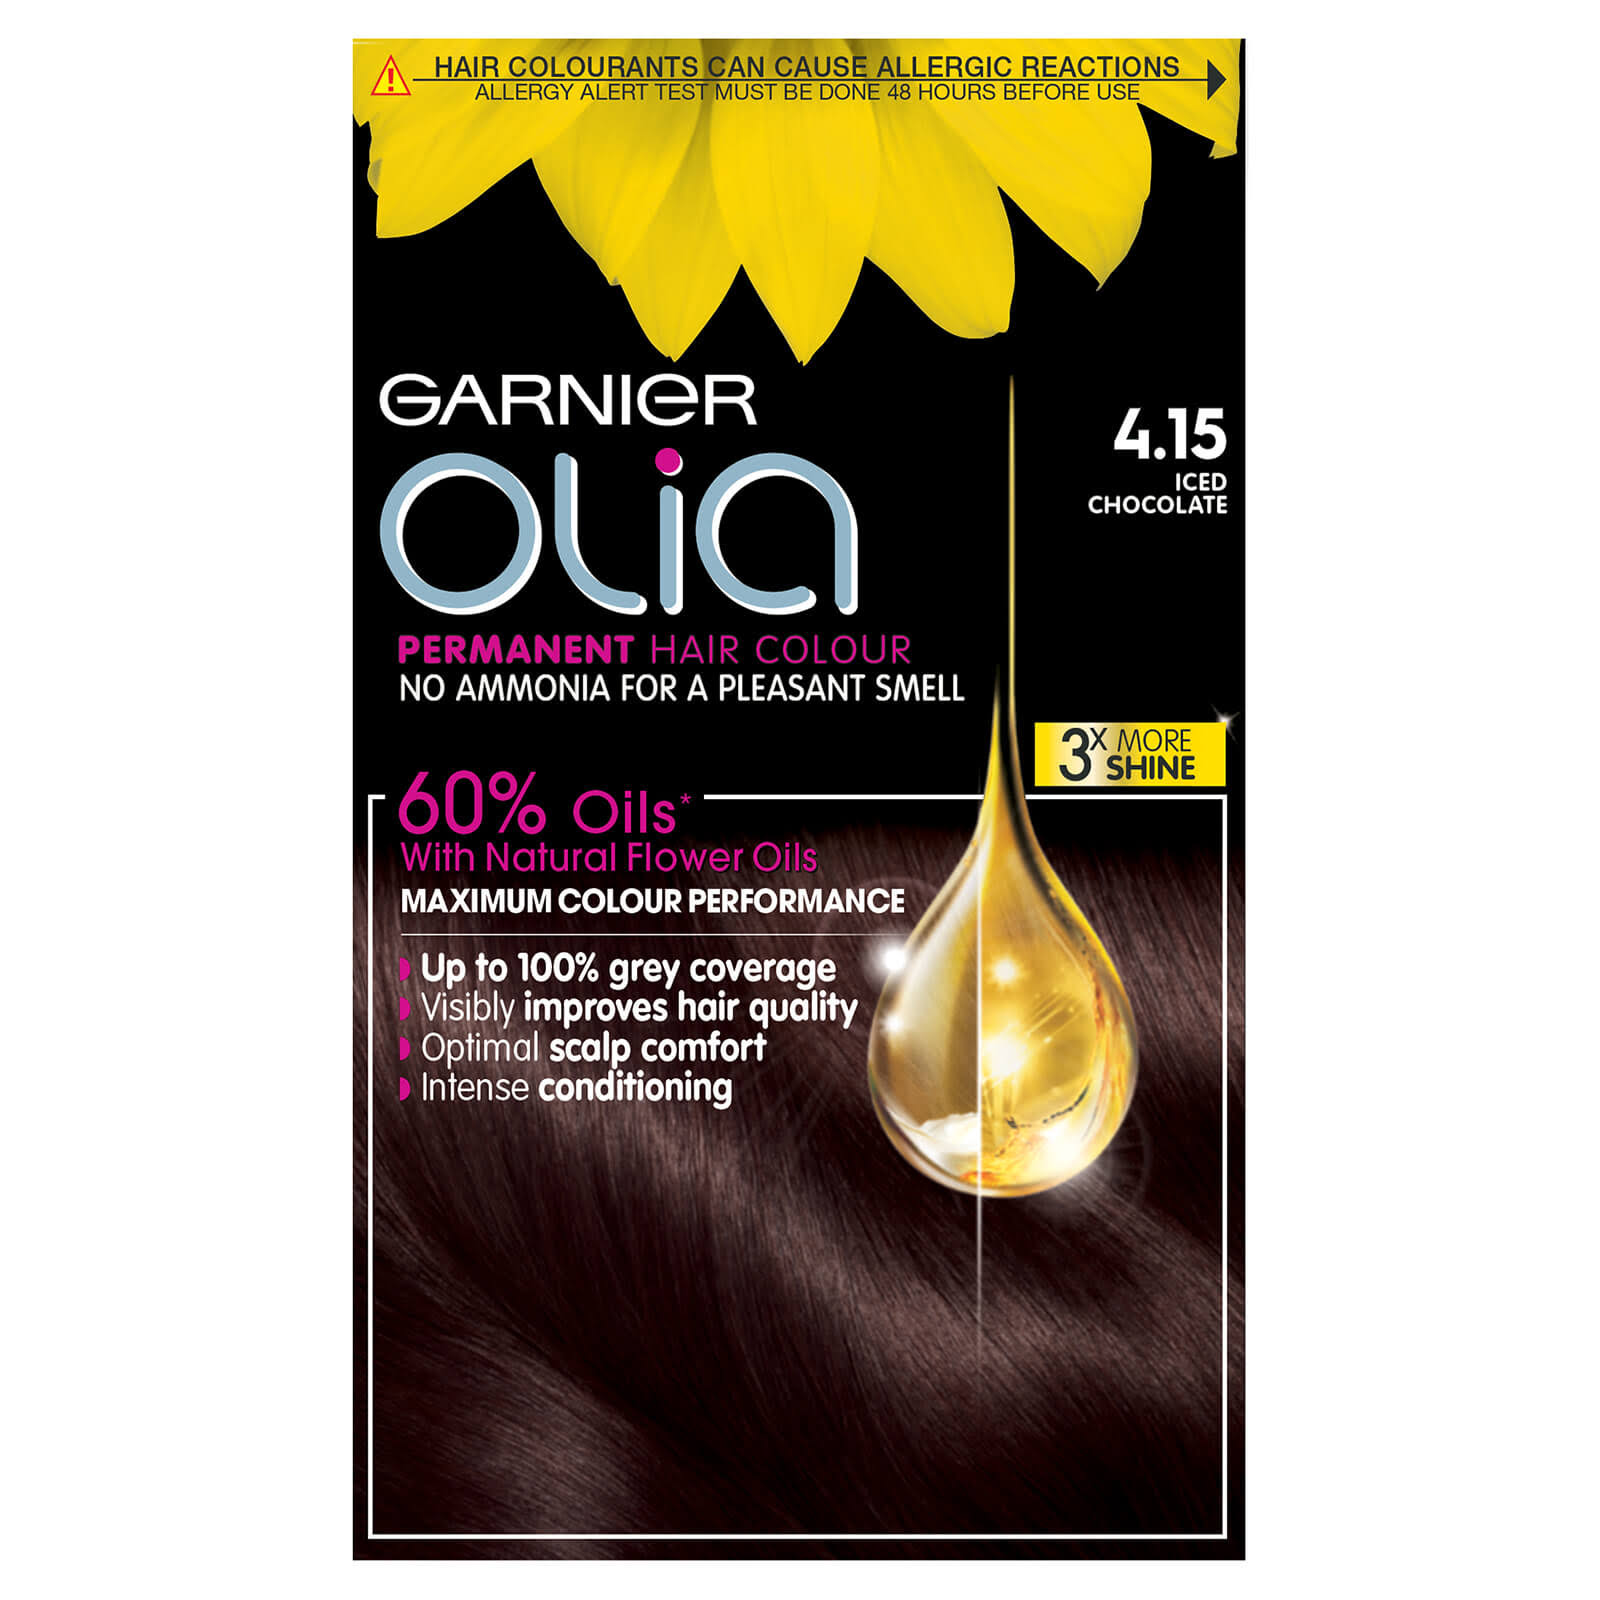 Garnier Olia Permanent Hair Dye - 4.15 Iced Chocolate